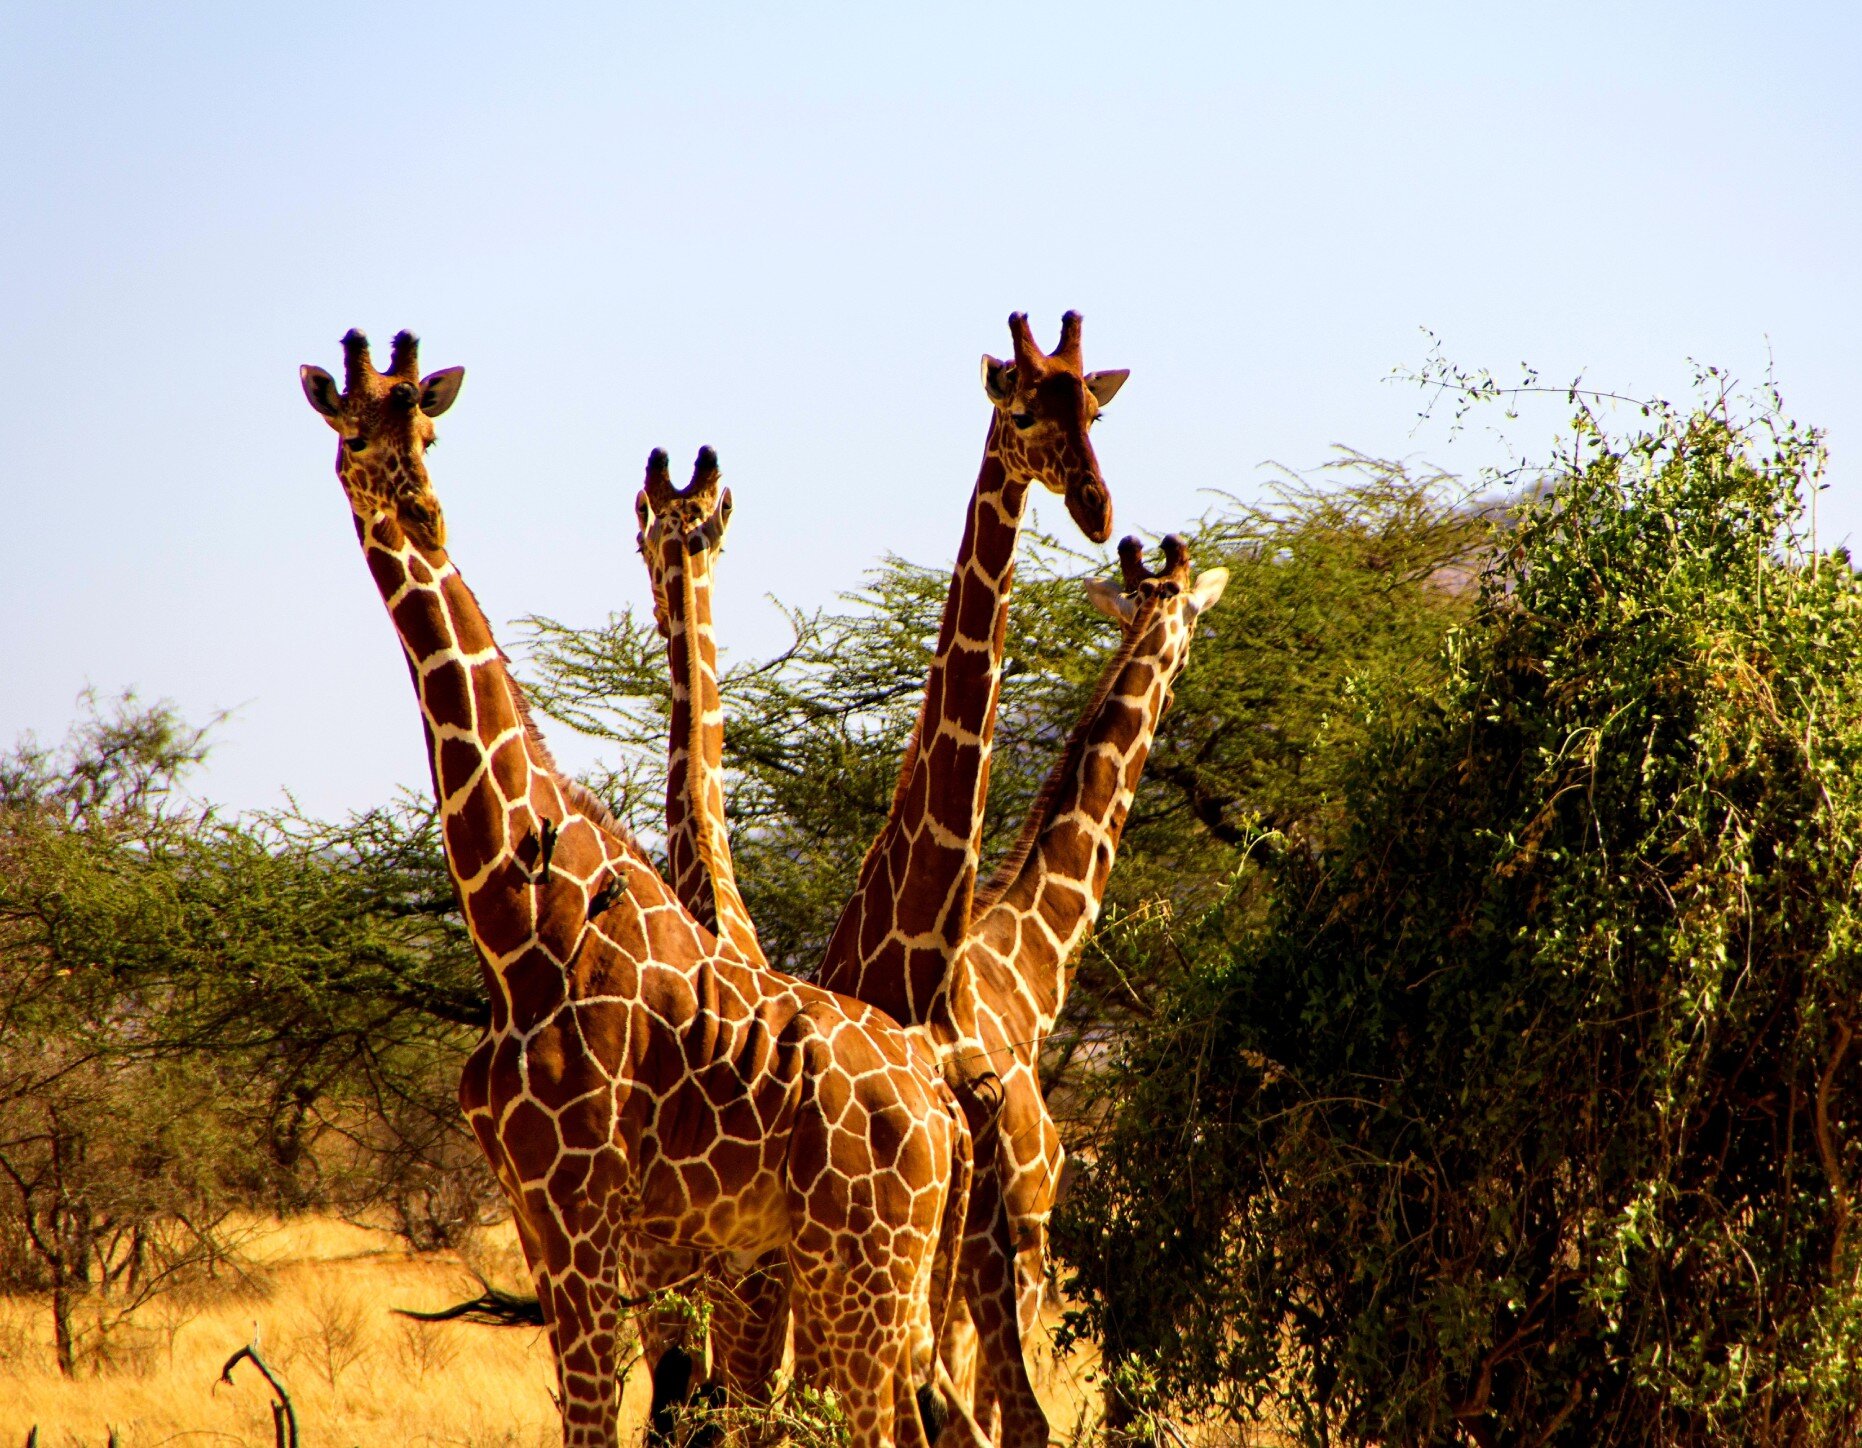 four-giraffes-in-the-african-savannah-kenya-nominated_t20_0x3o3v.jpg